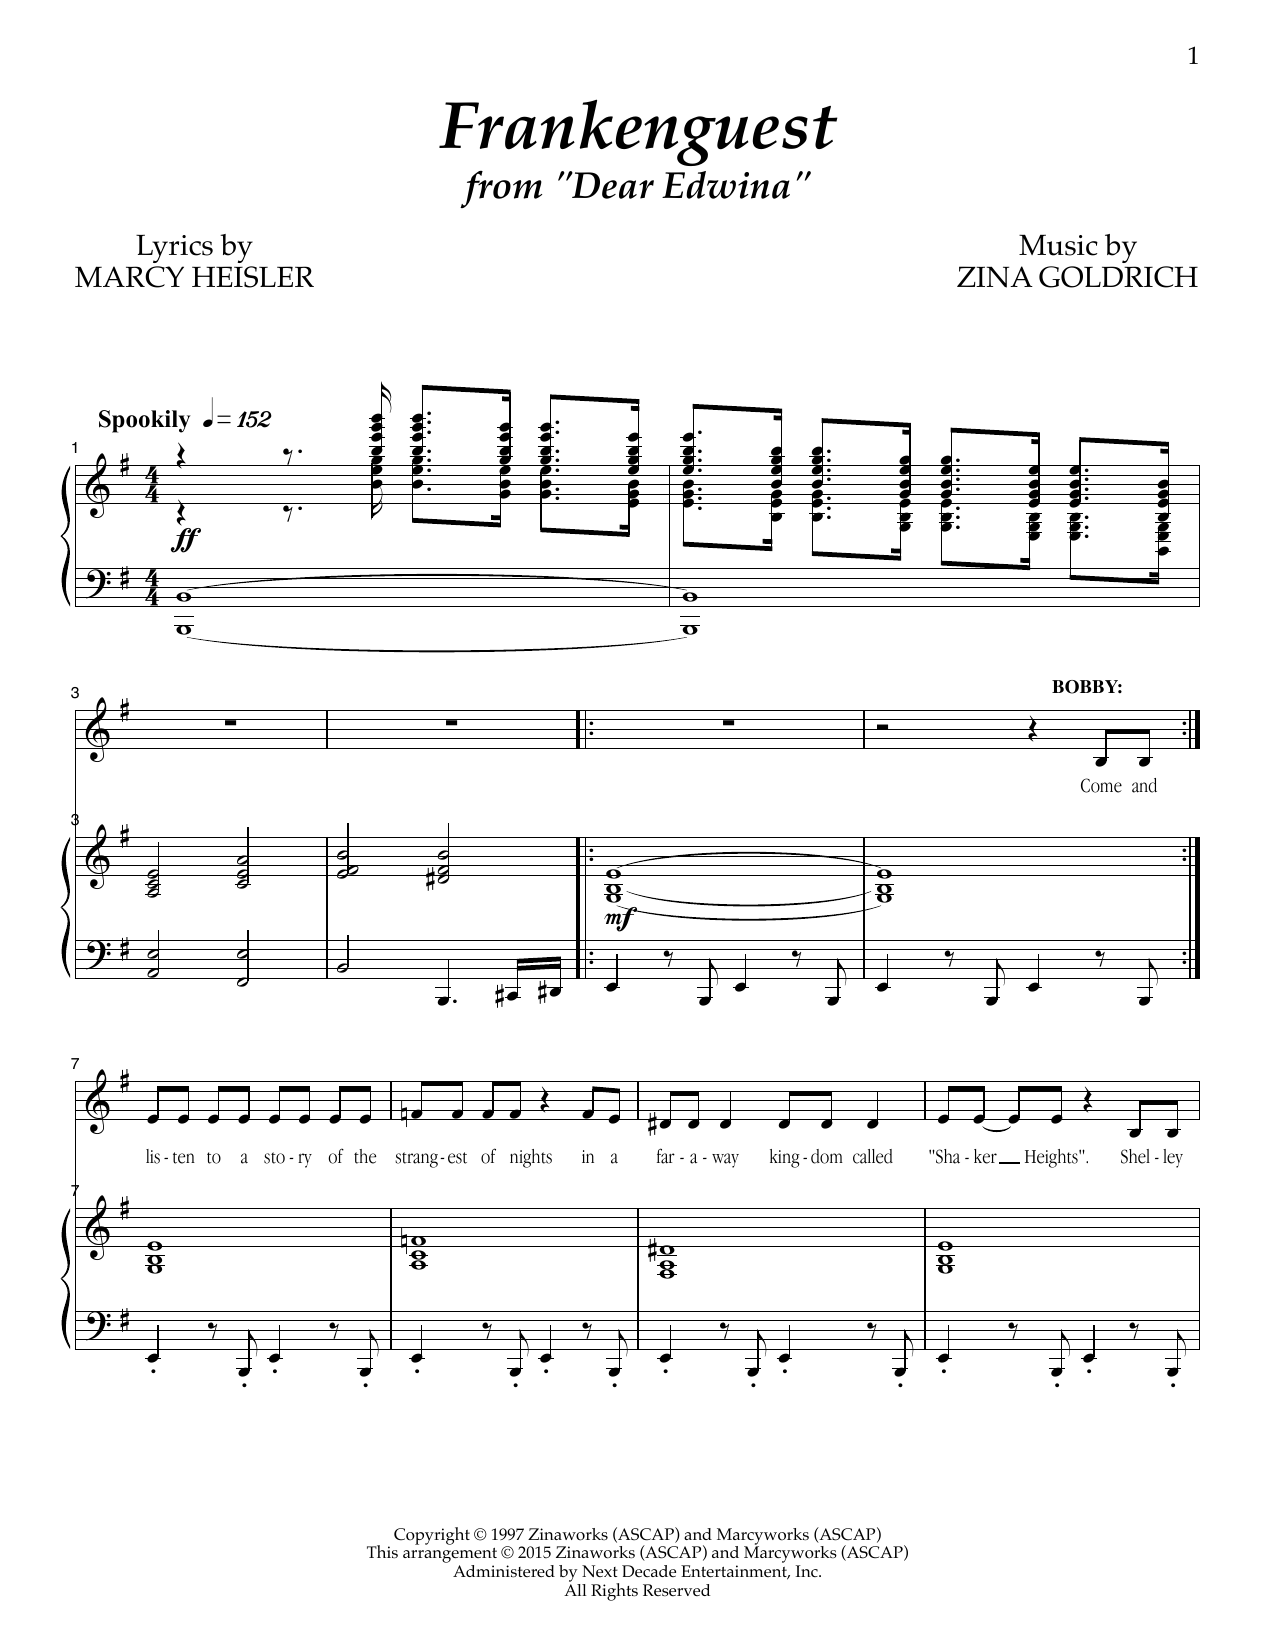 Goldrich & Heisler Frankenguest Sheet Music Notes & Chords for Piano & Vocal - Download or Print PDF